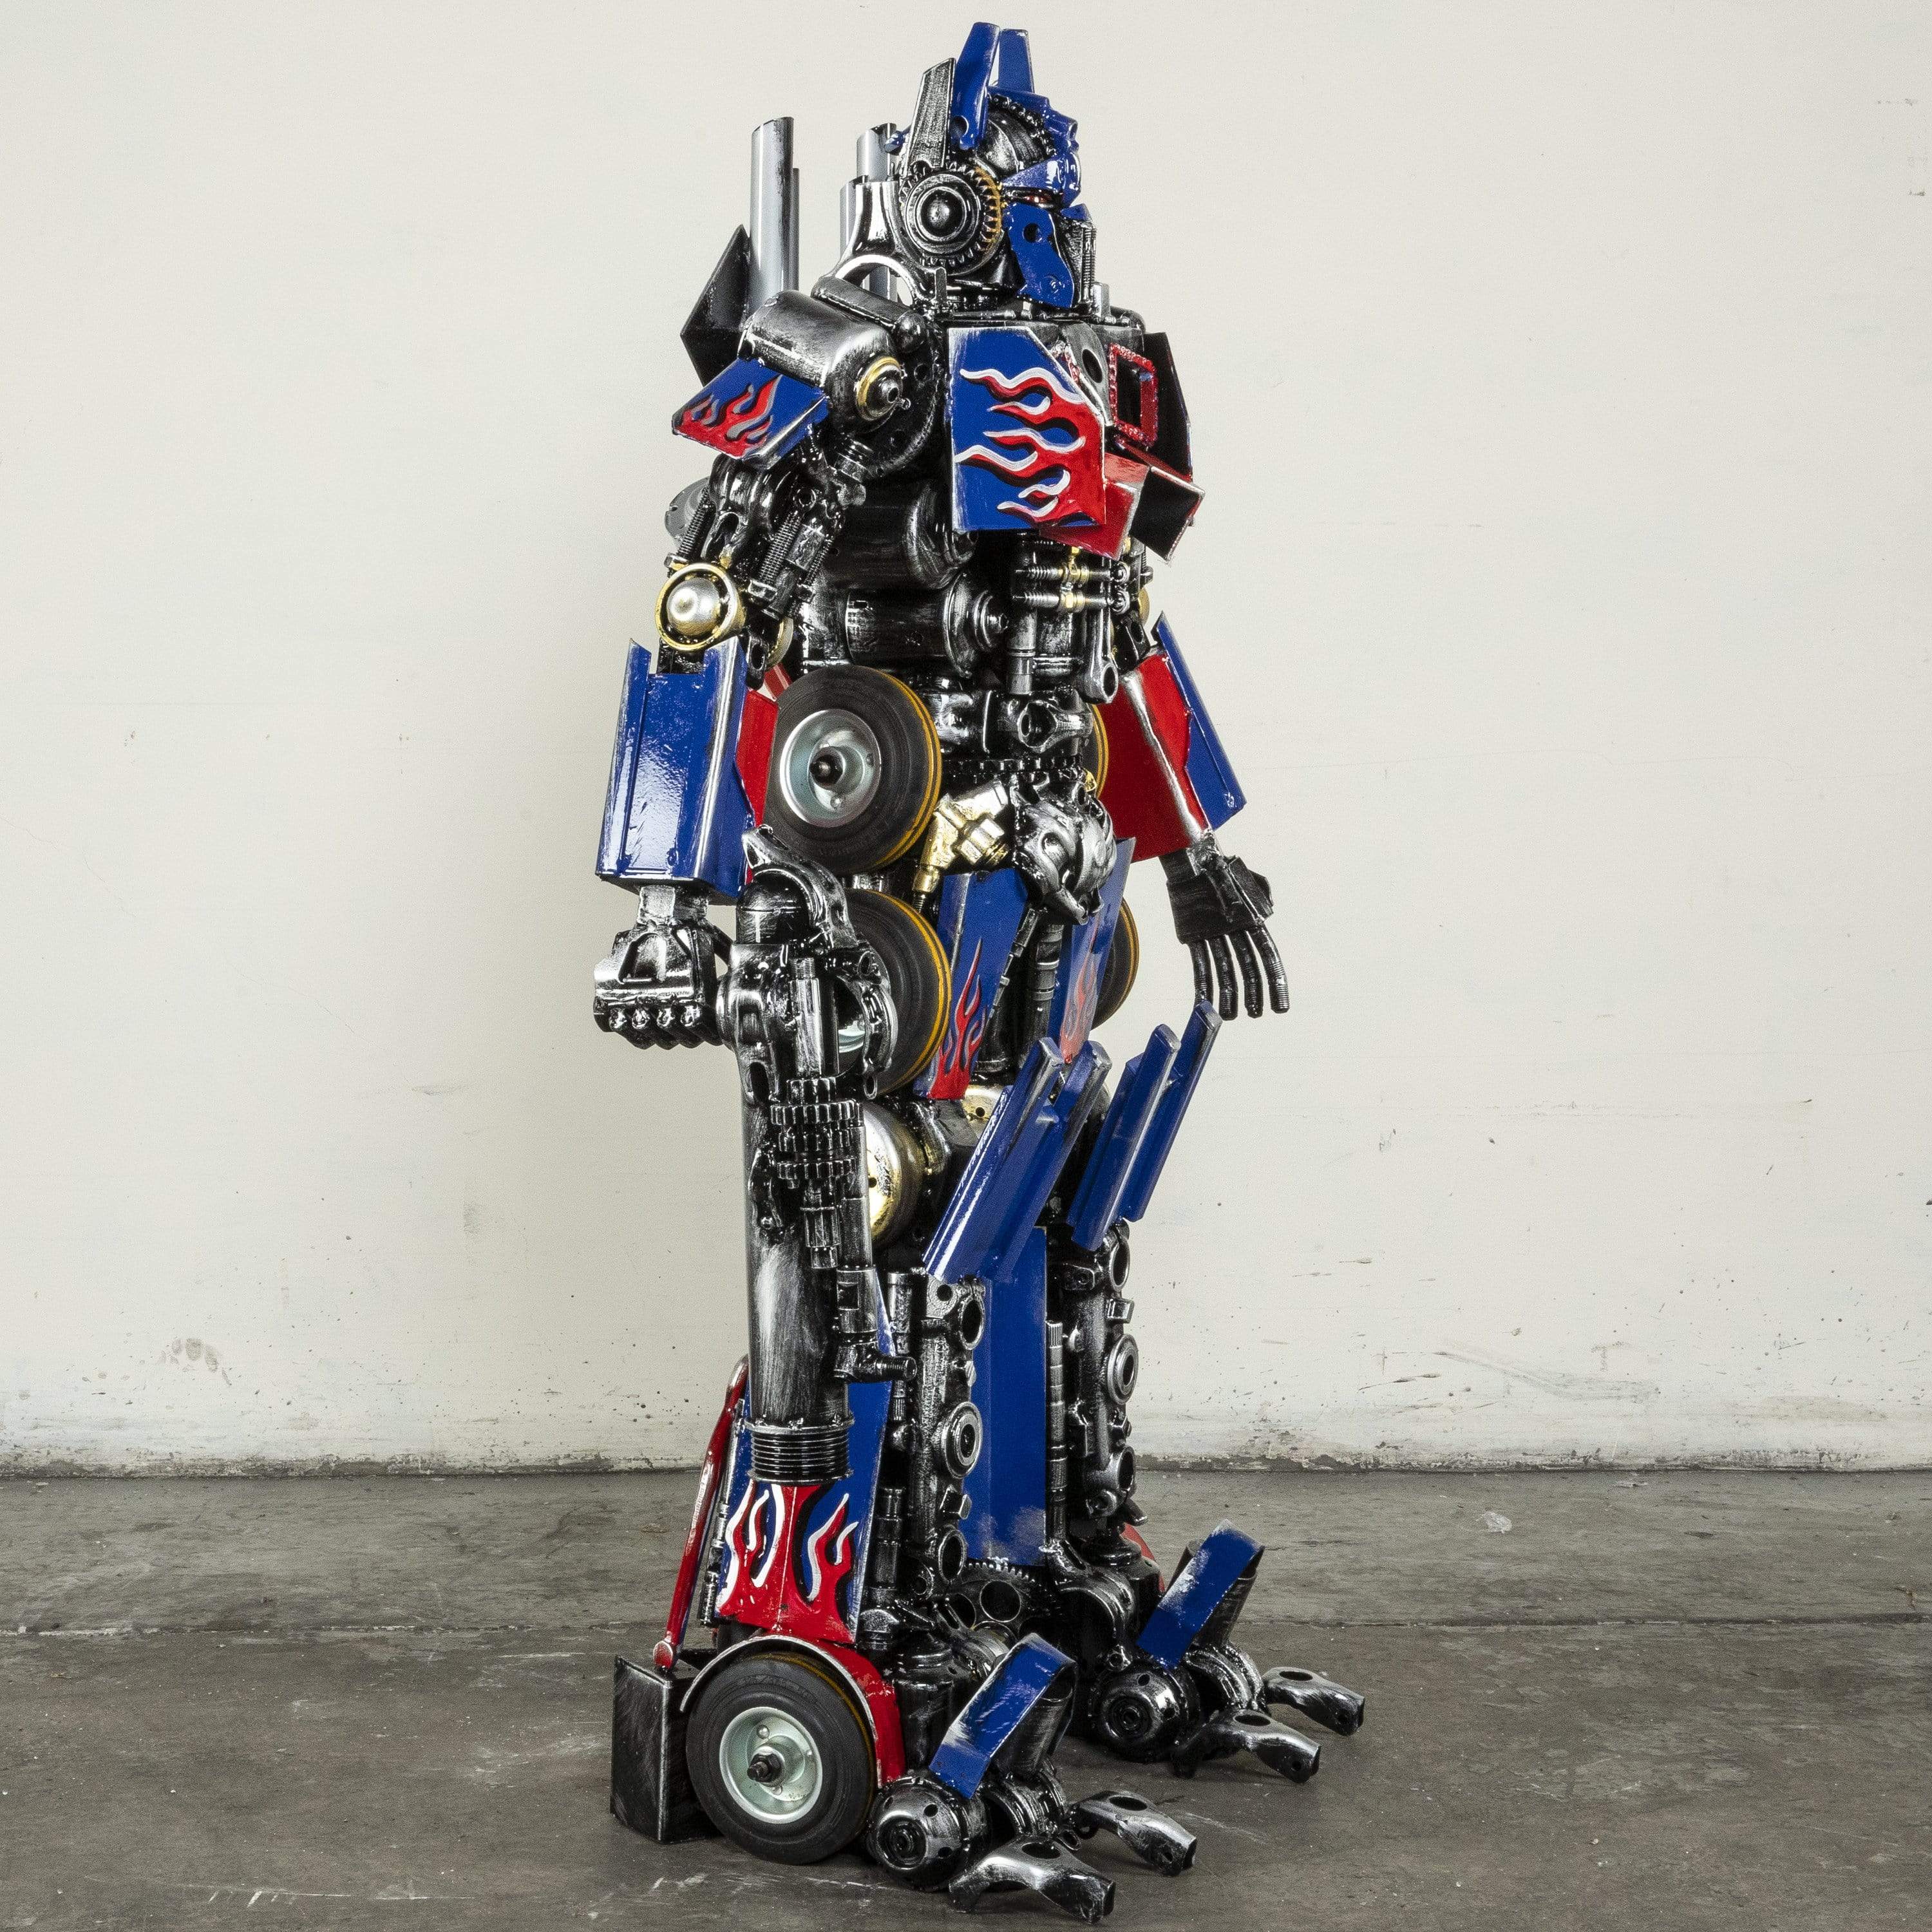 Kalifano Recycled Metal Art 44" Optimus Prime Inspired Recycled Metal Art Sculpture RMS-OP110-P